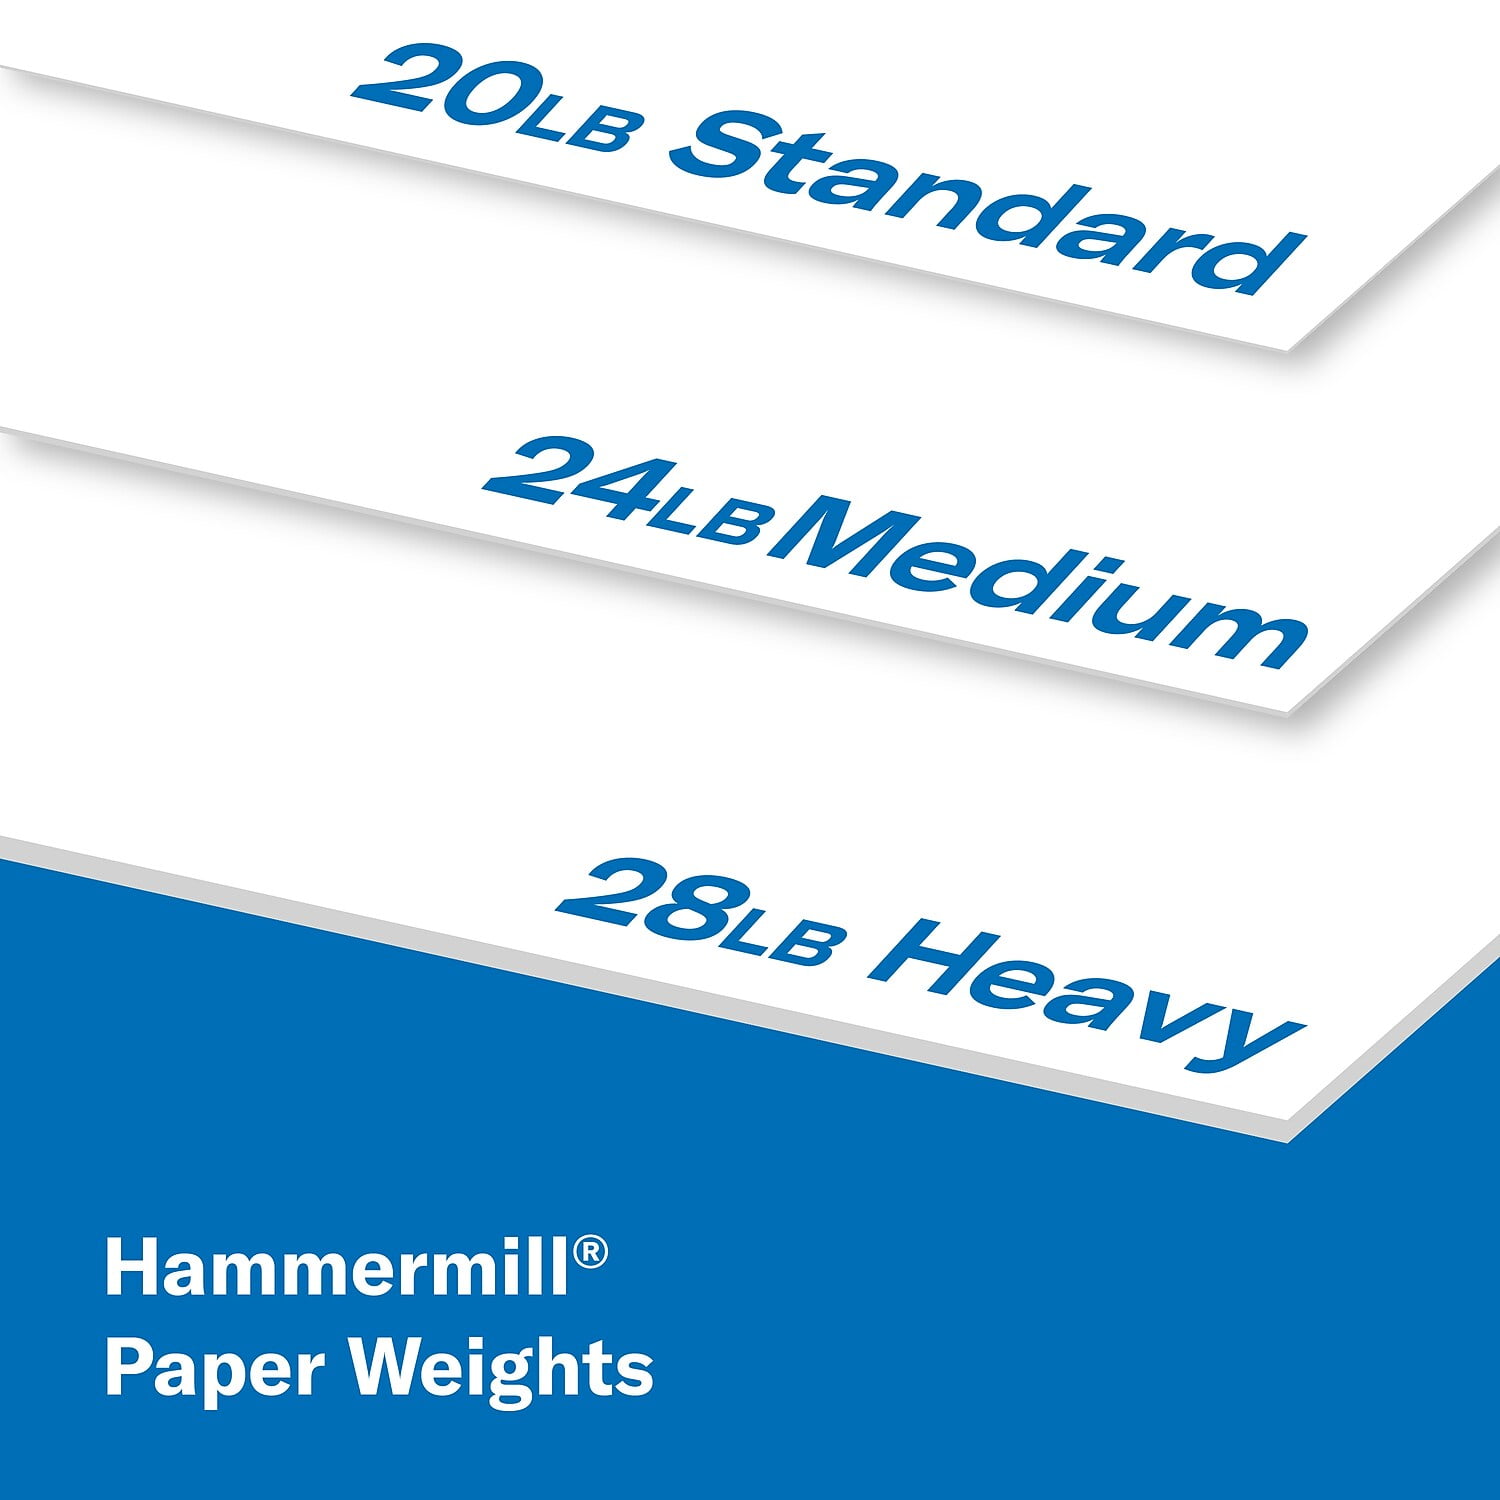 Hammermill Copy Plus Print Paper, 92 Bright, 20lb, 8.5 x 14, White, 500/Ream